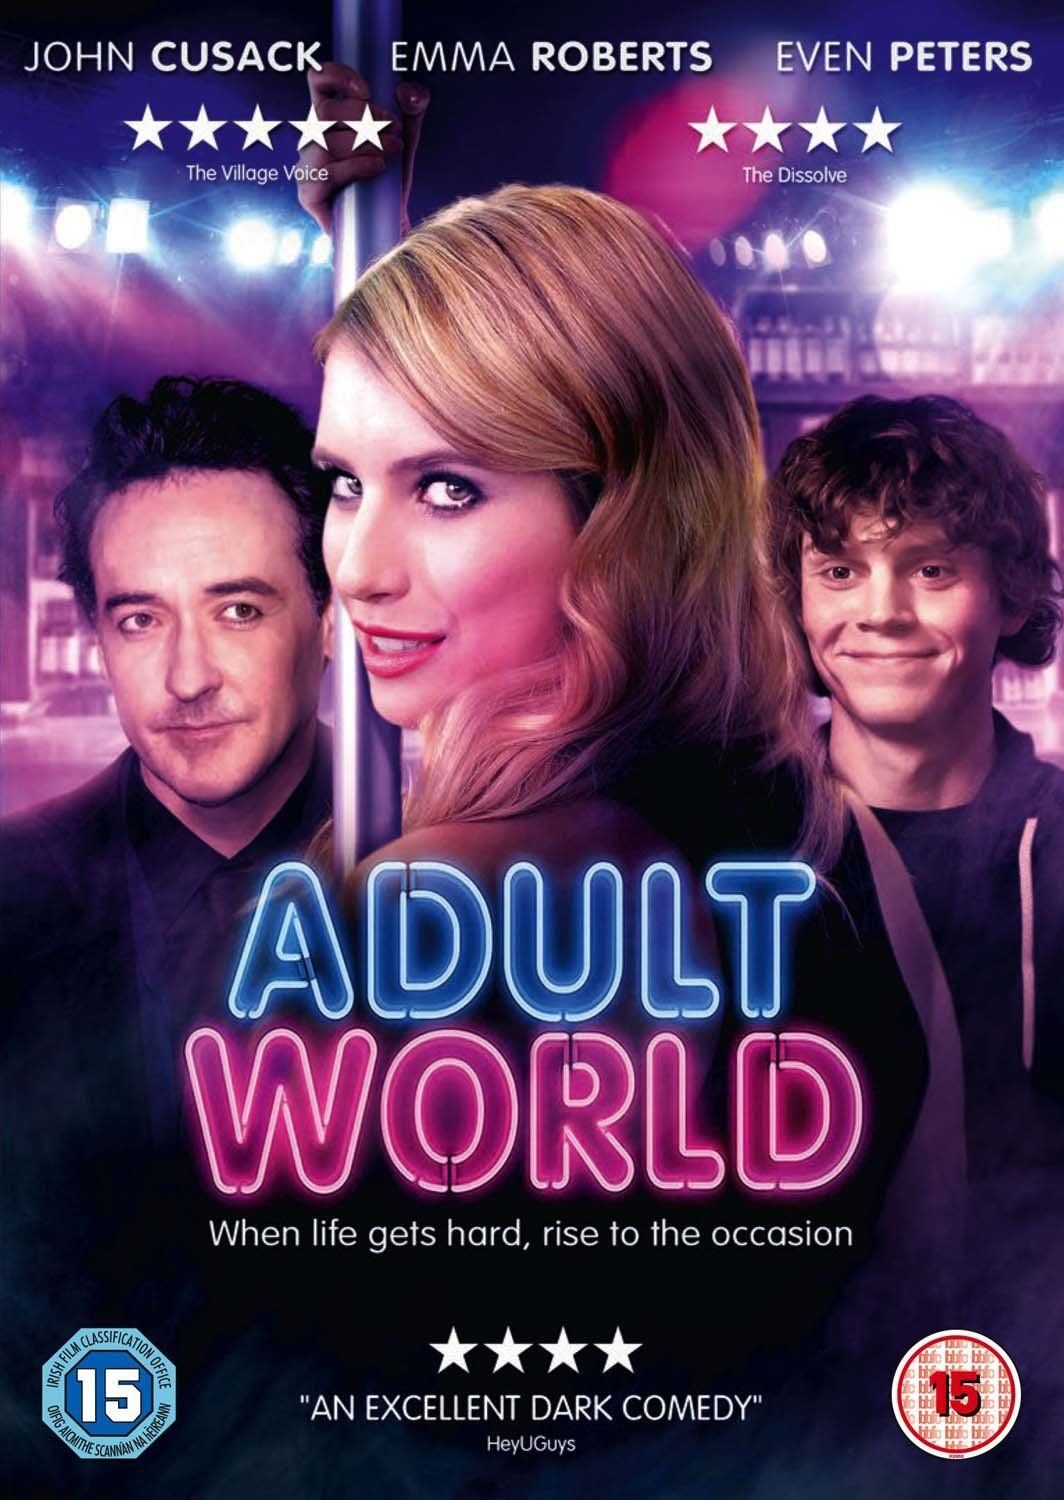 Adult World online